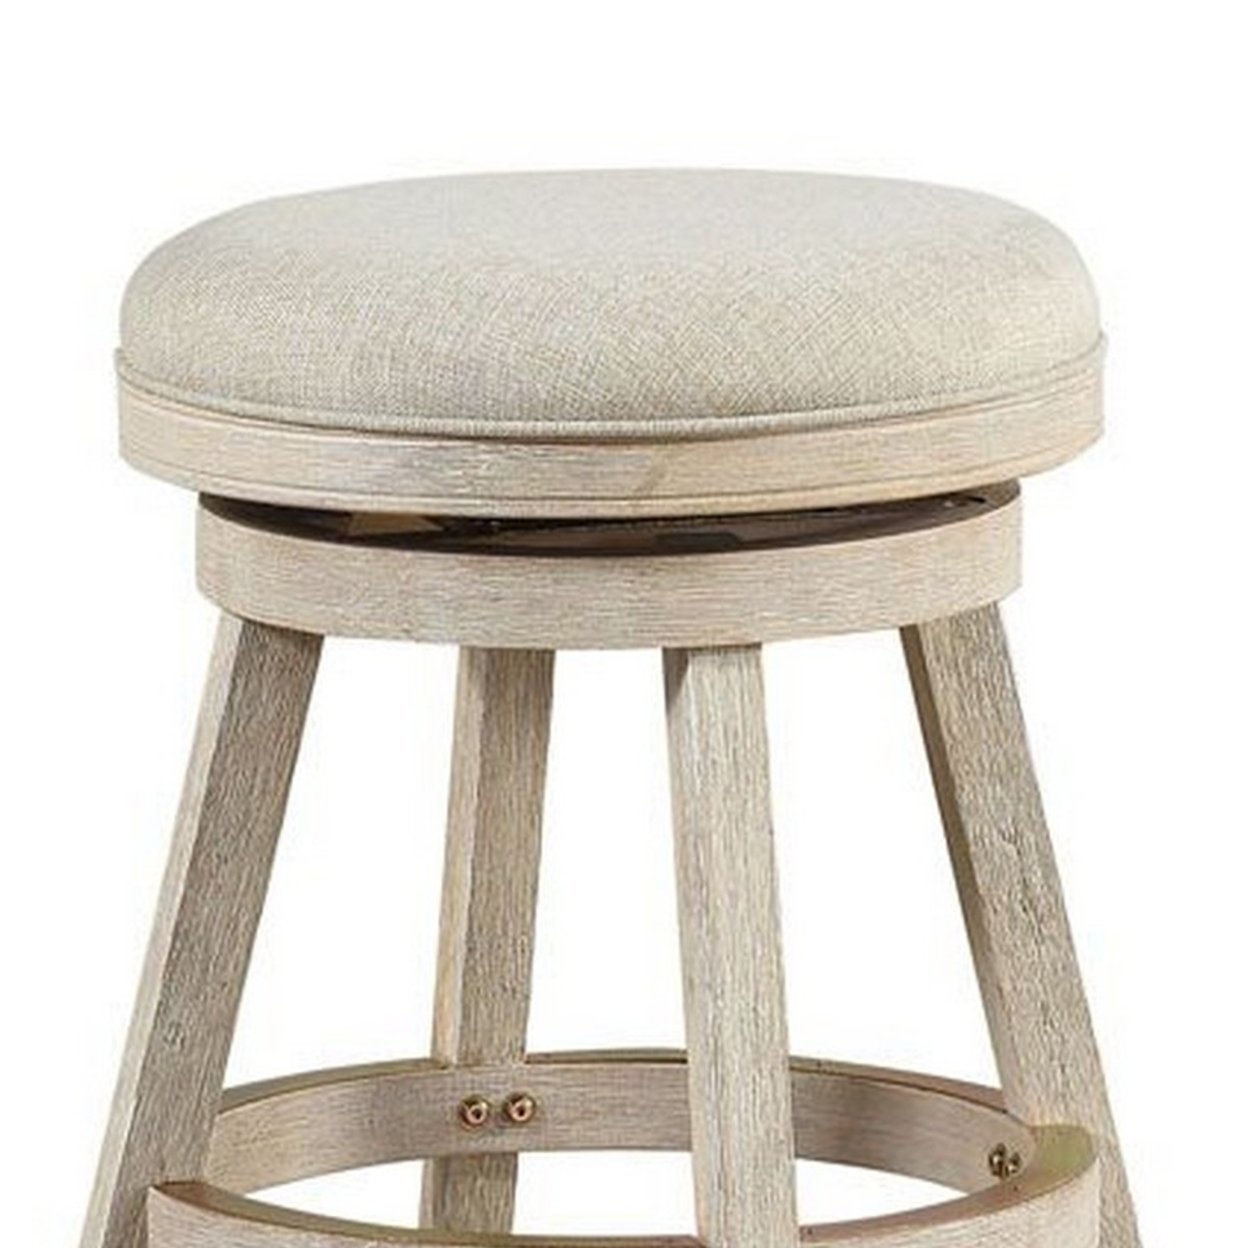 Wooden Swivel Counter Stool With Round Fabric Seat, Gray- Saltoro Sherpi